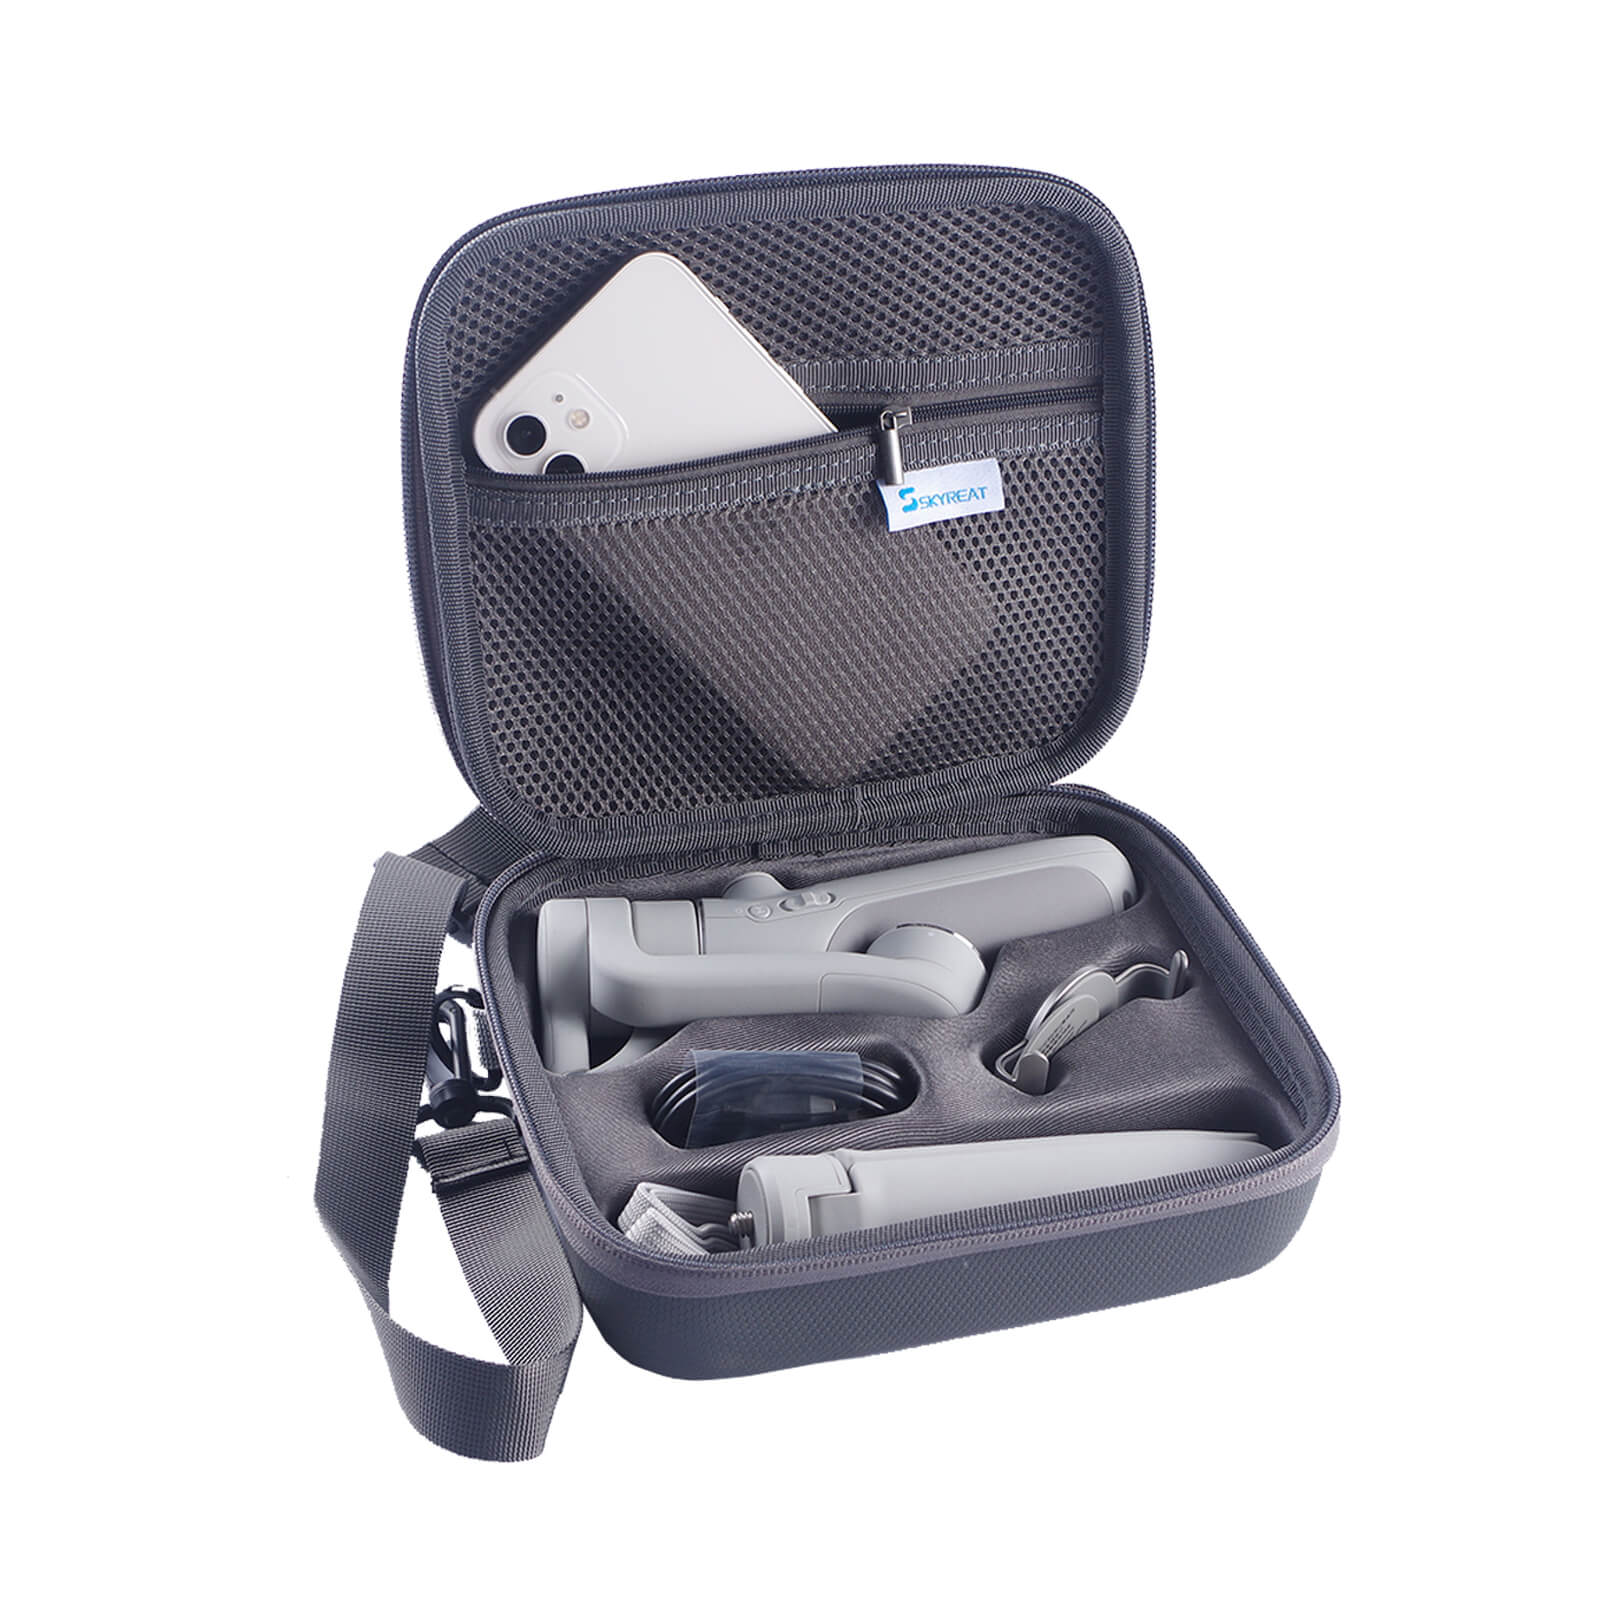 Skyreat OM 5 Handbag Travel Case for DJI OSMO Mobile 5